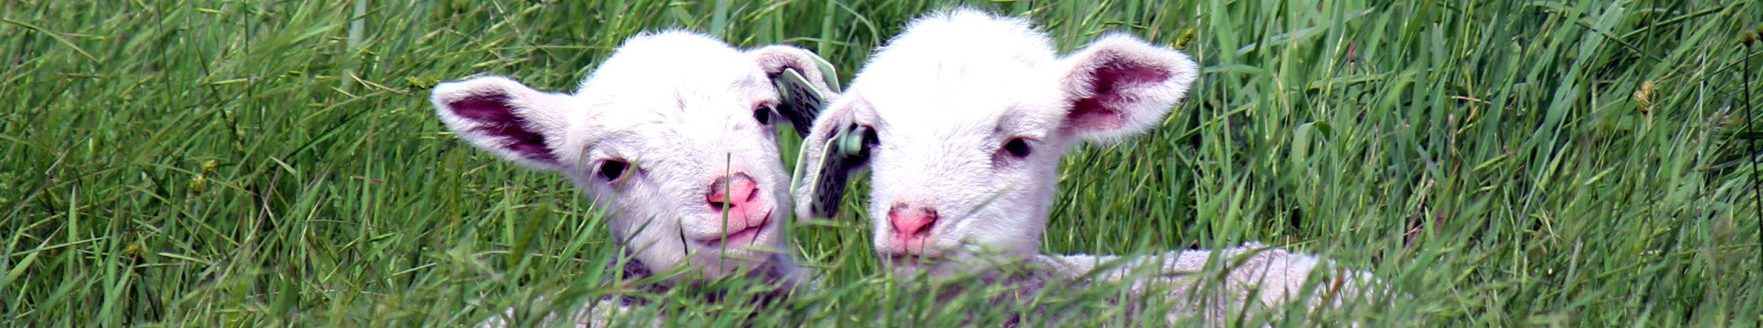 baby lambs